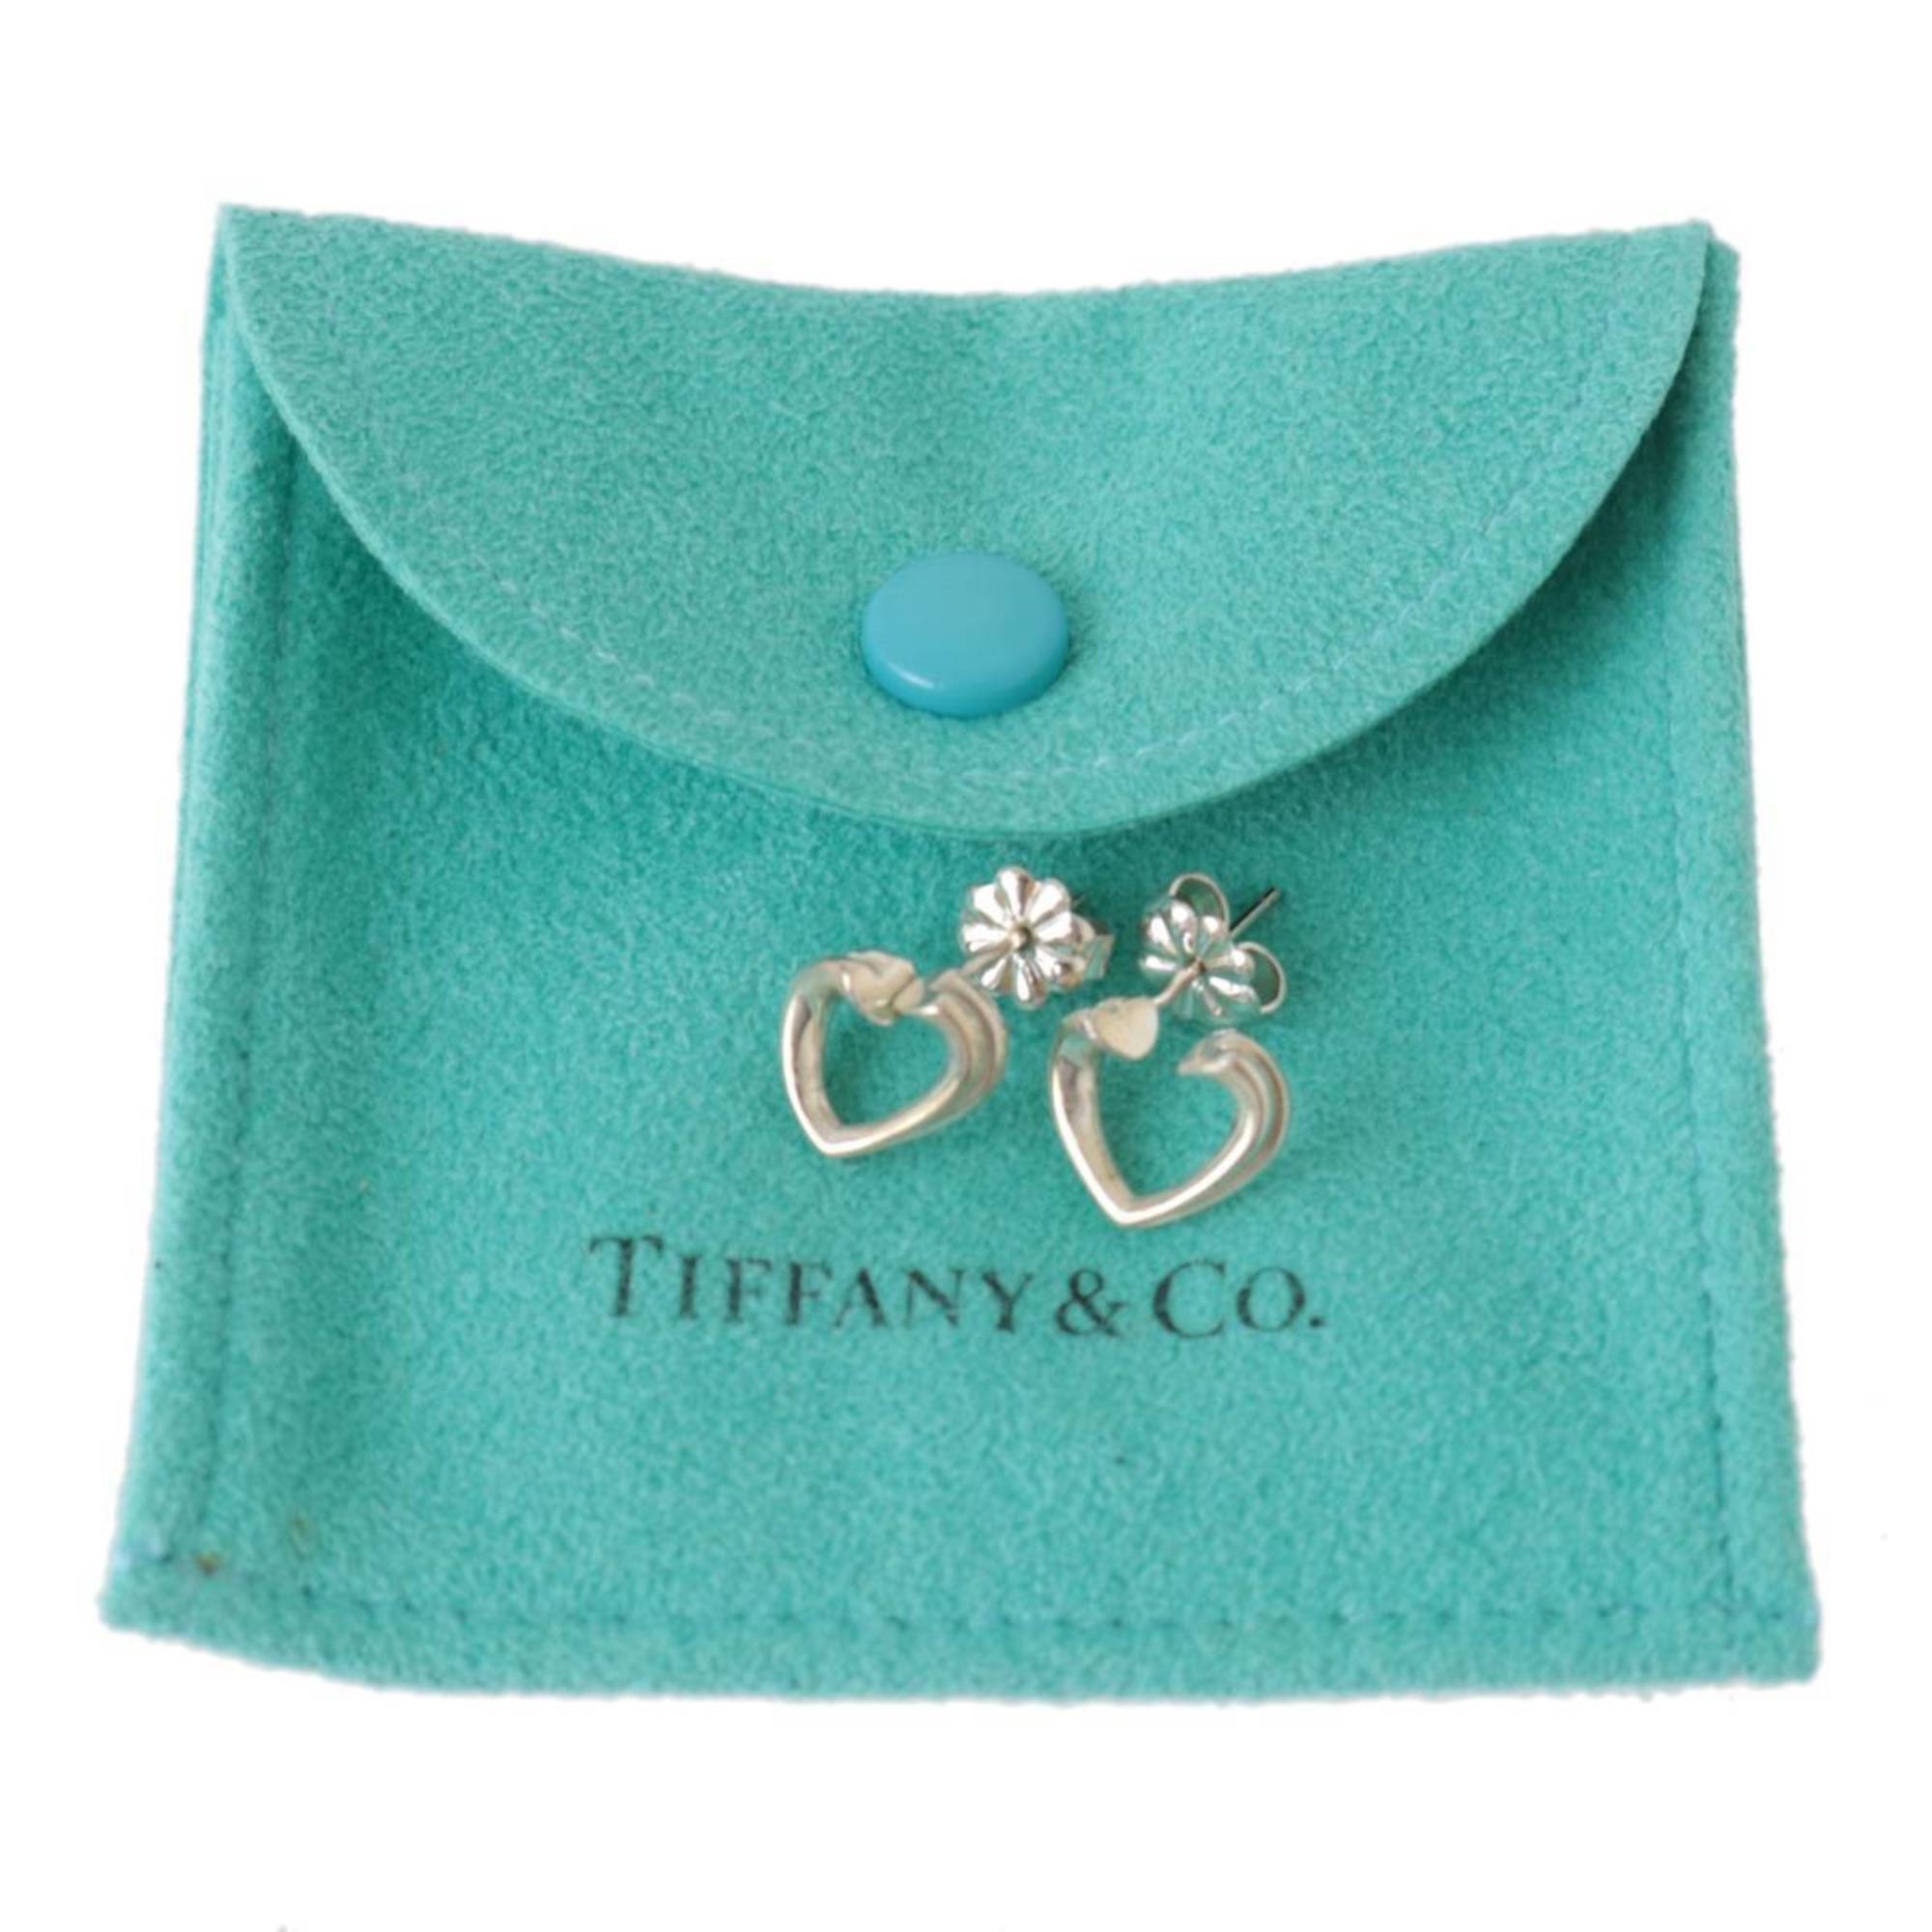 Tiffany & Co. / Paloma Picasso Heart Motif Earrings Sterling Silver